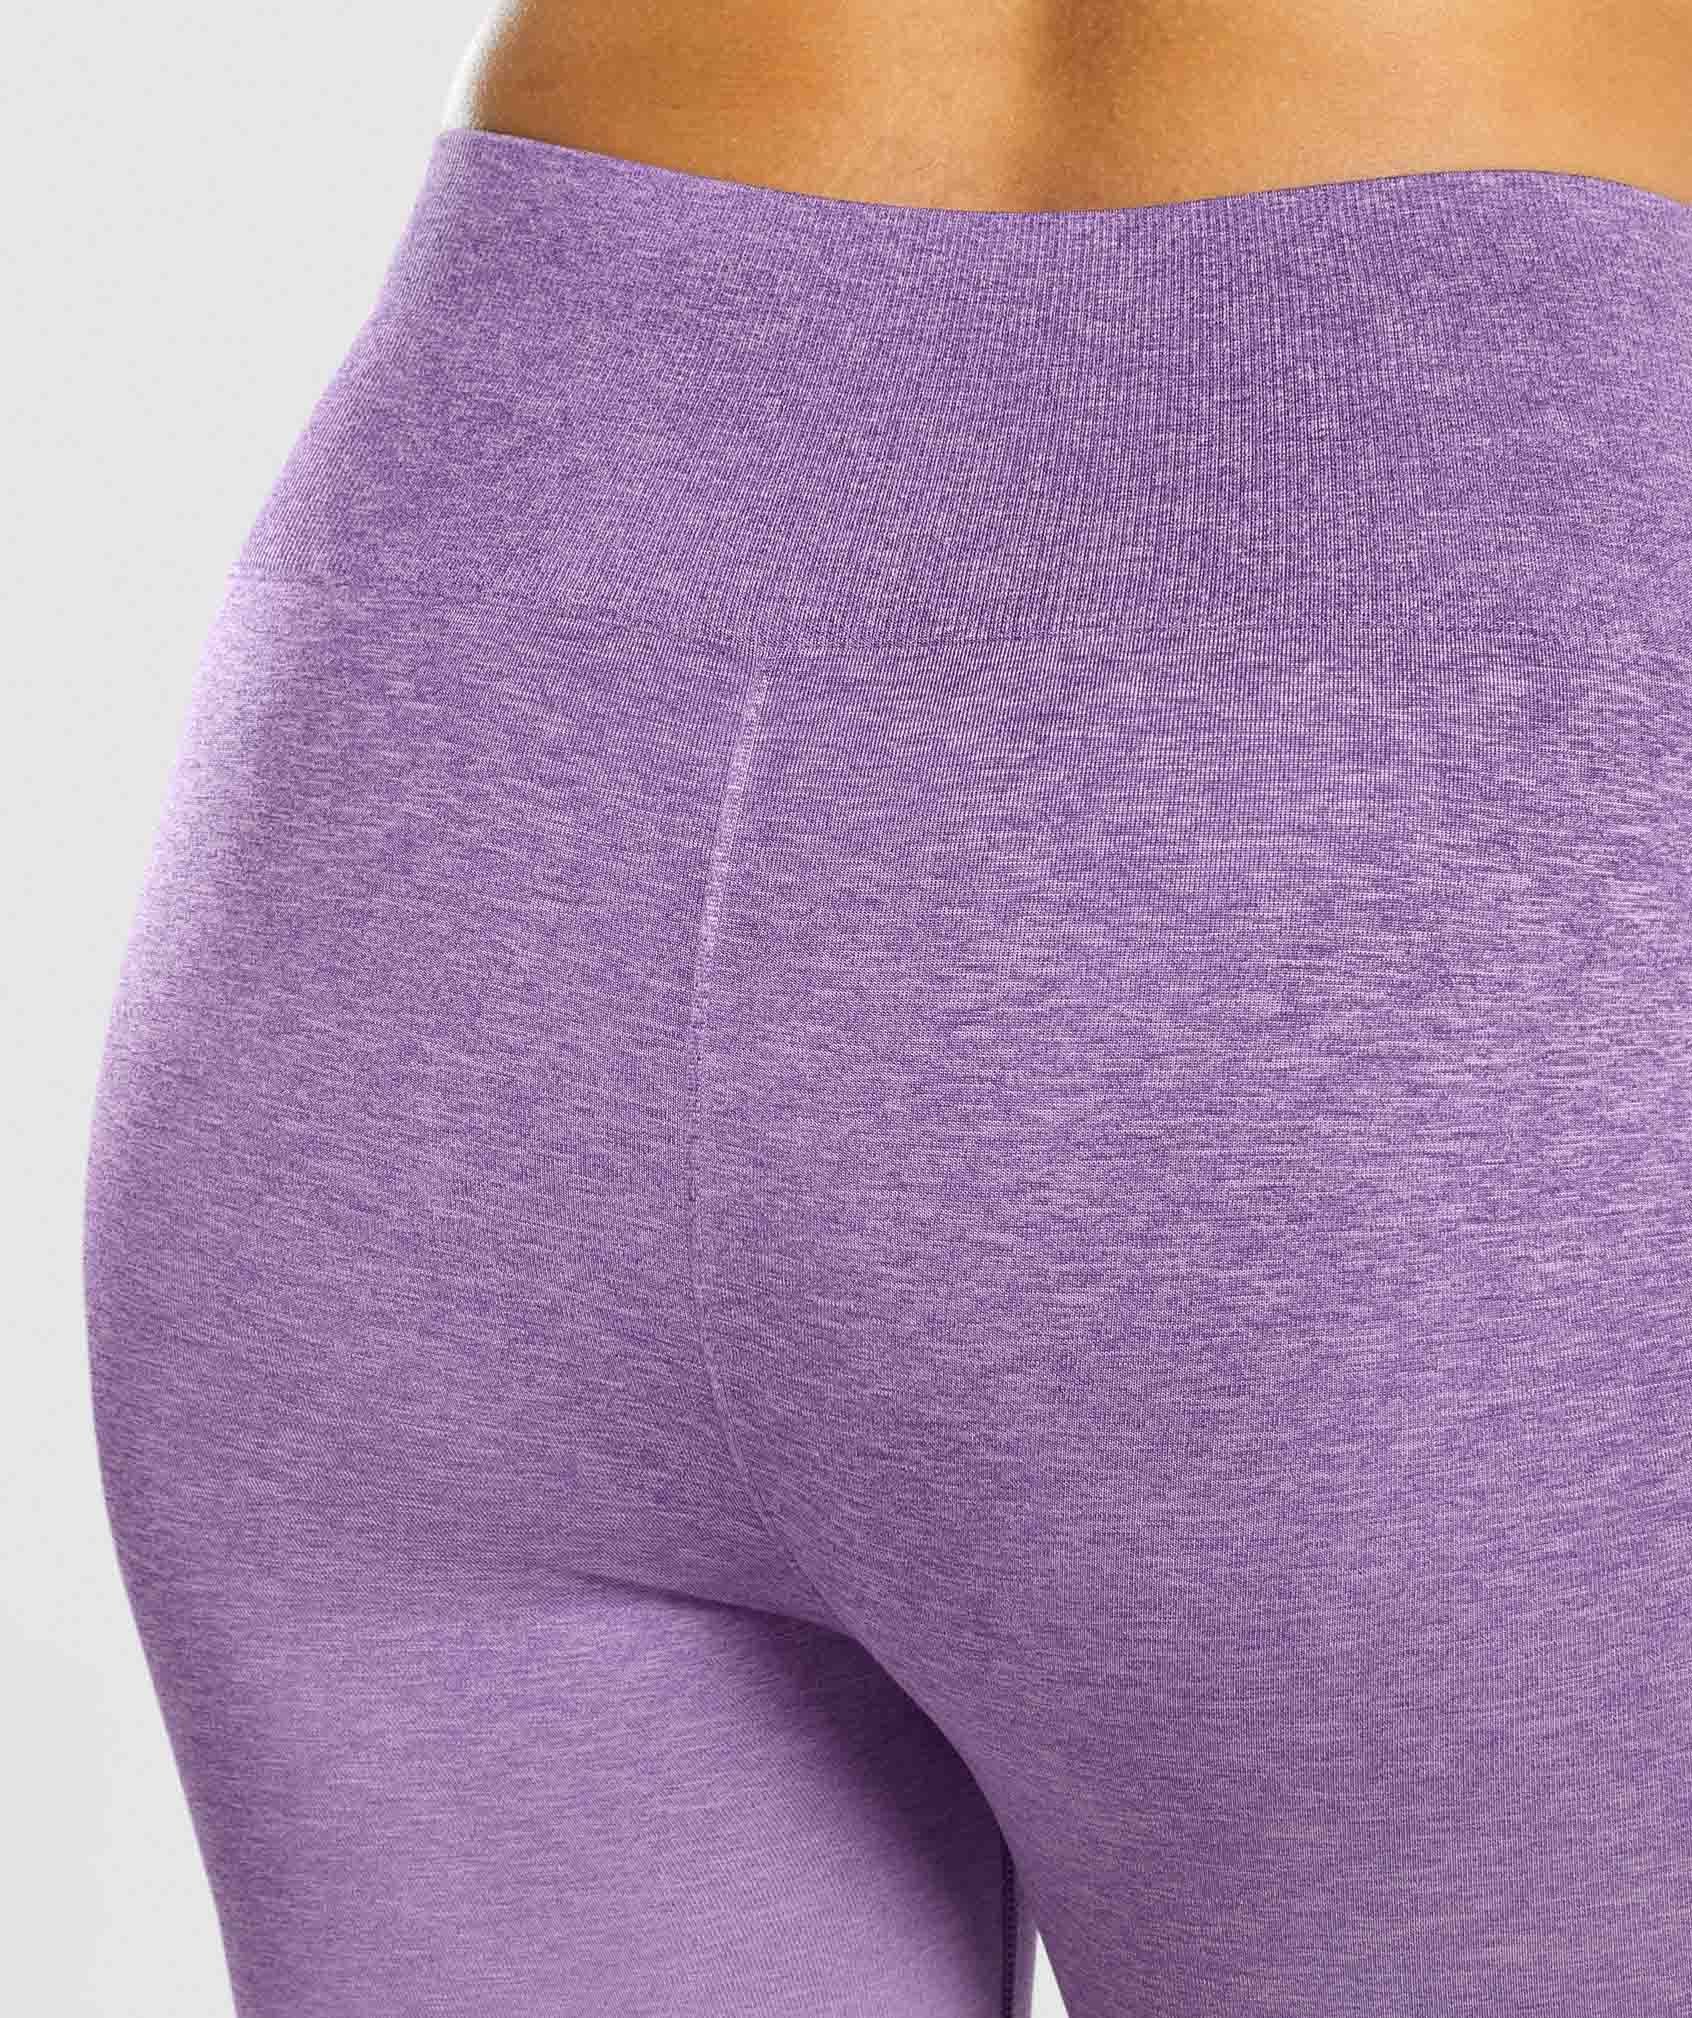 NWOT Gymshark Seamless Flow Purple Ombre Leggings  Seamless leggings, Ombre  leggings, Clothes design